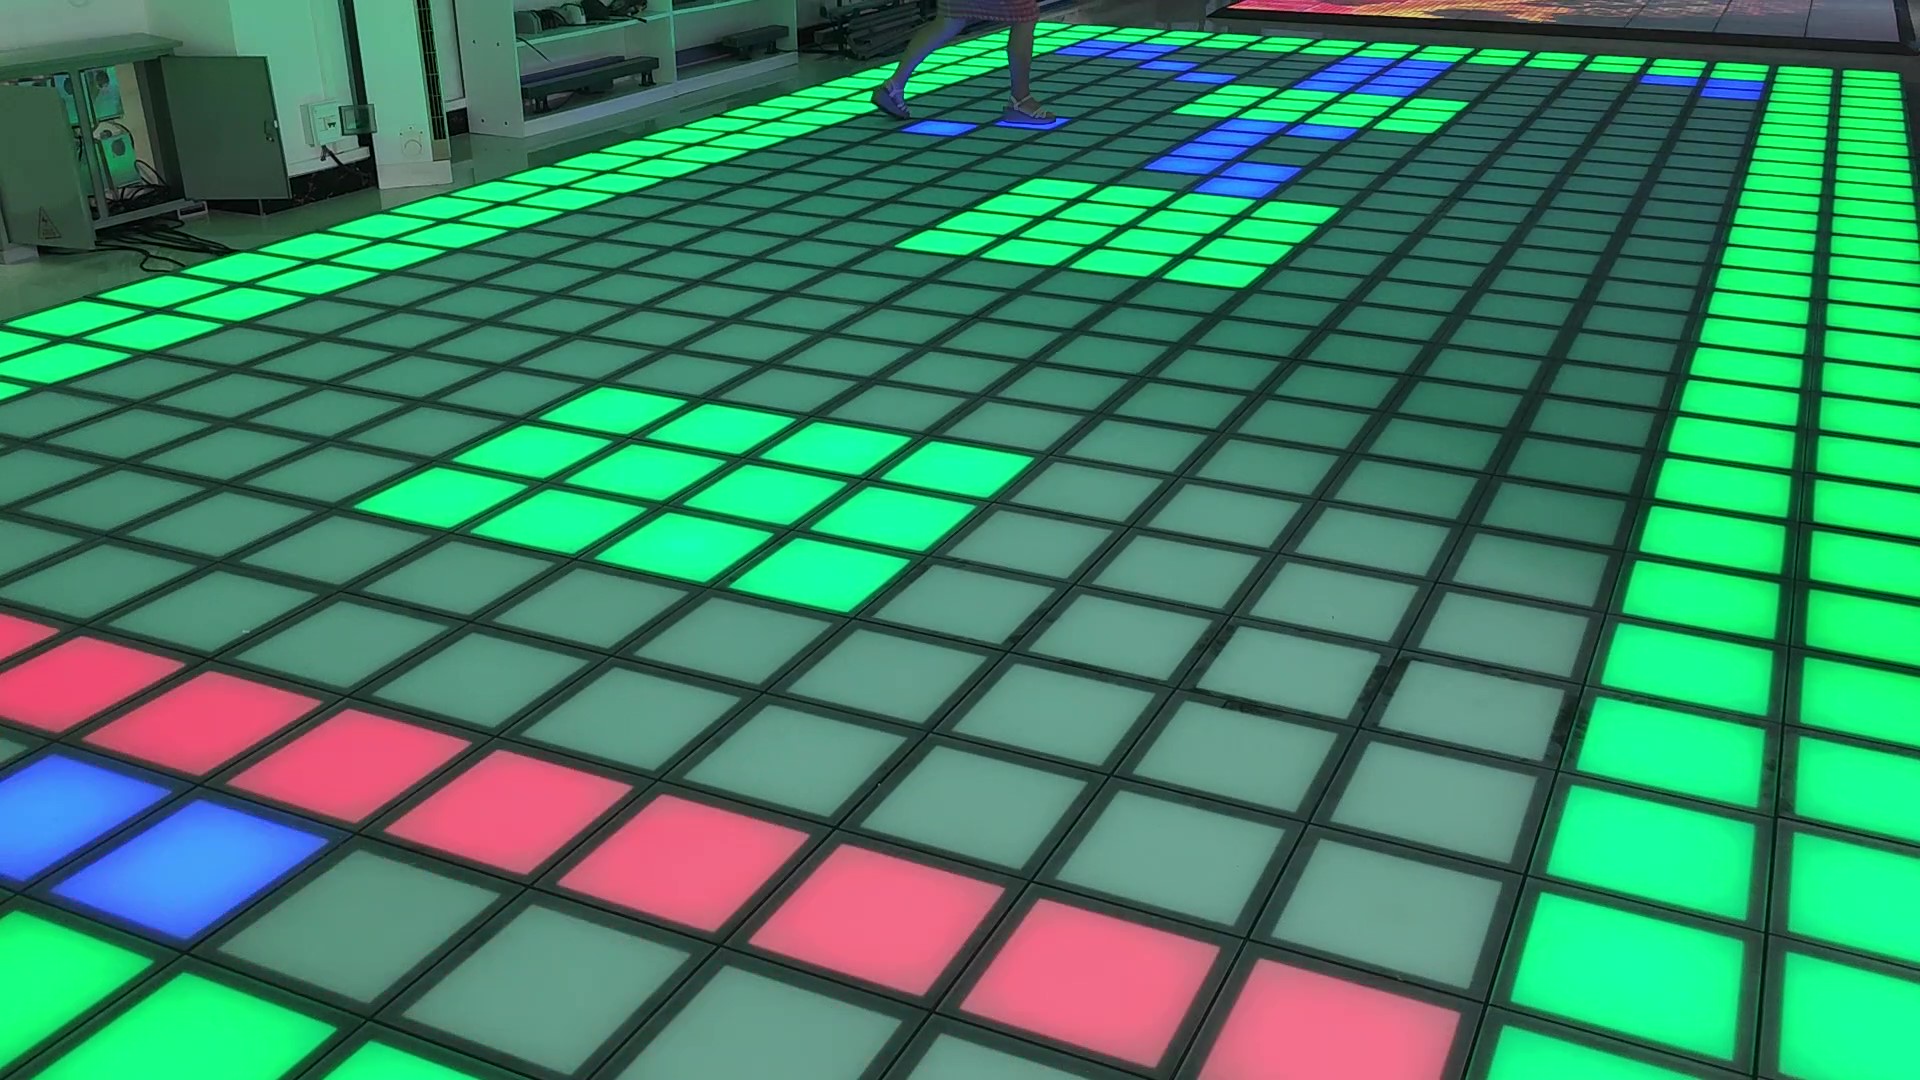 Game activate led dance floor grid HS-LDF01G - Led stage light - 8